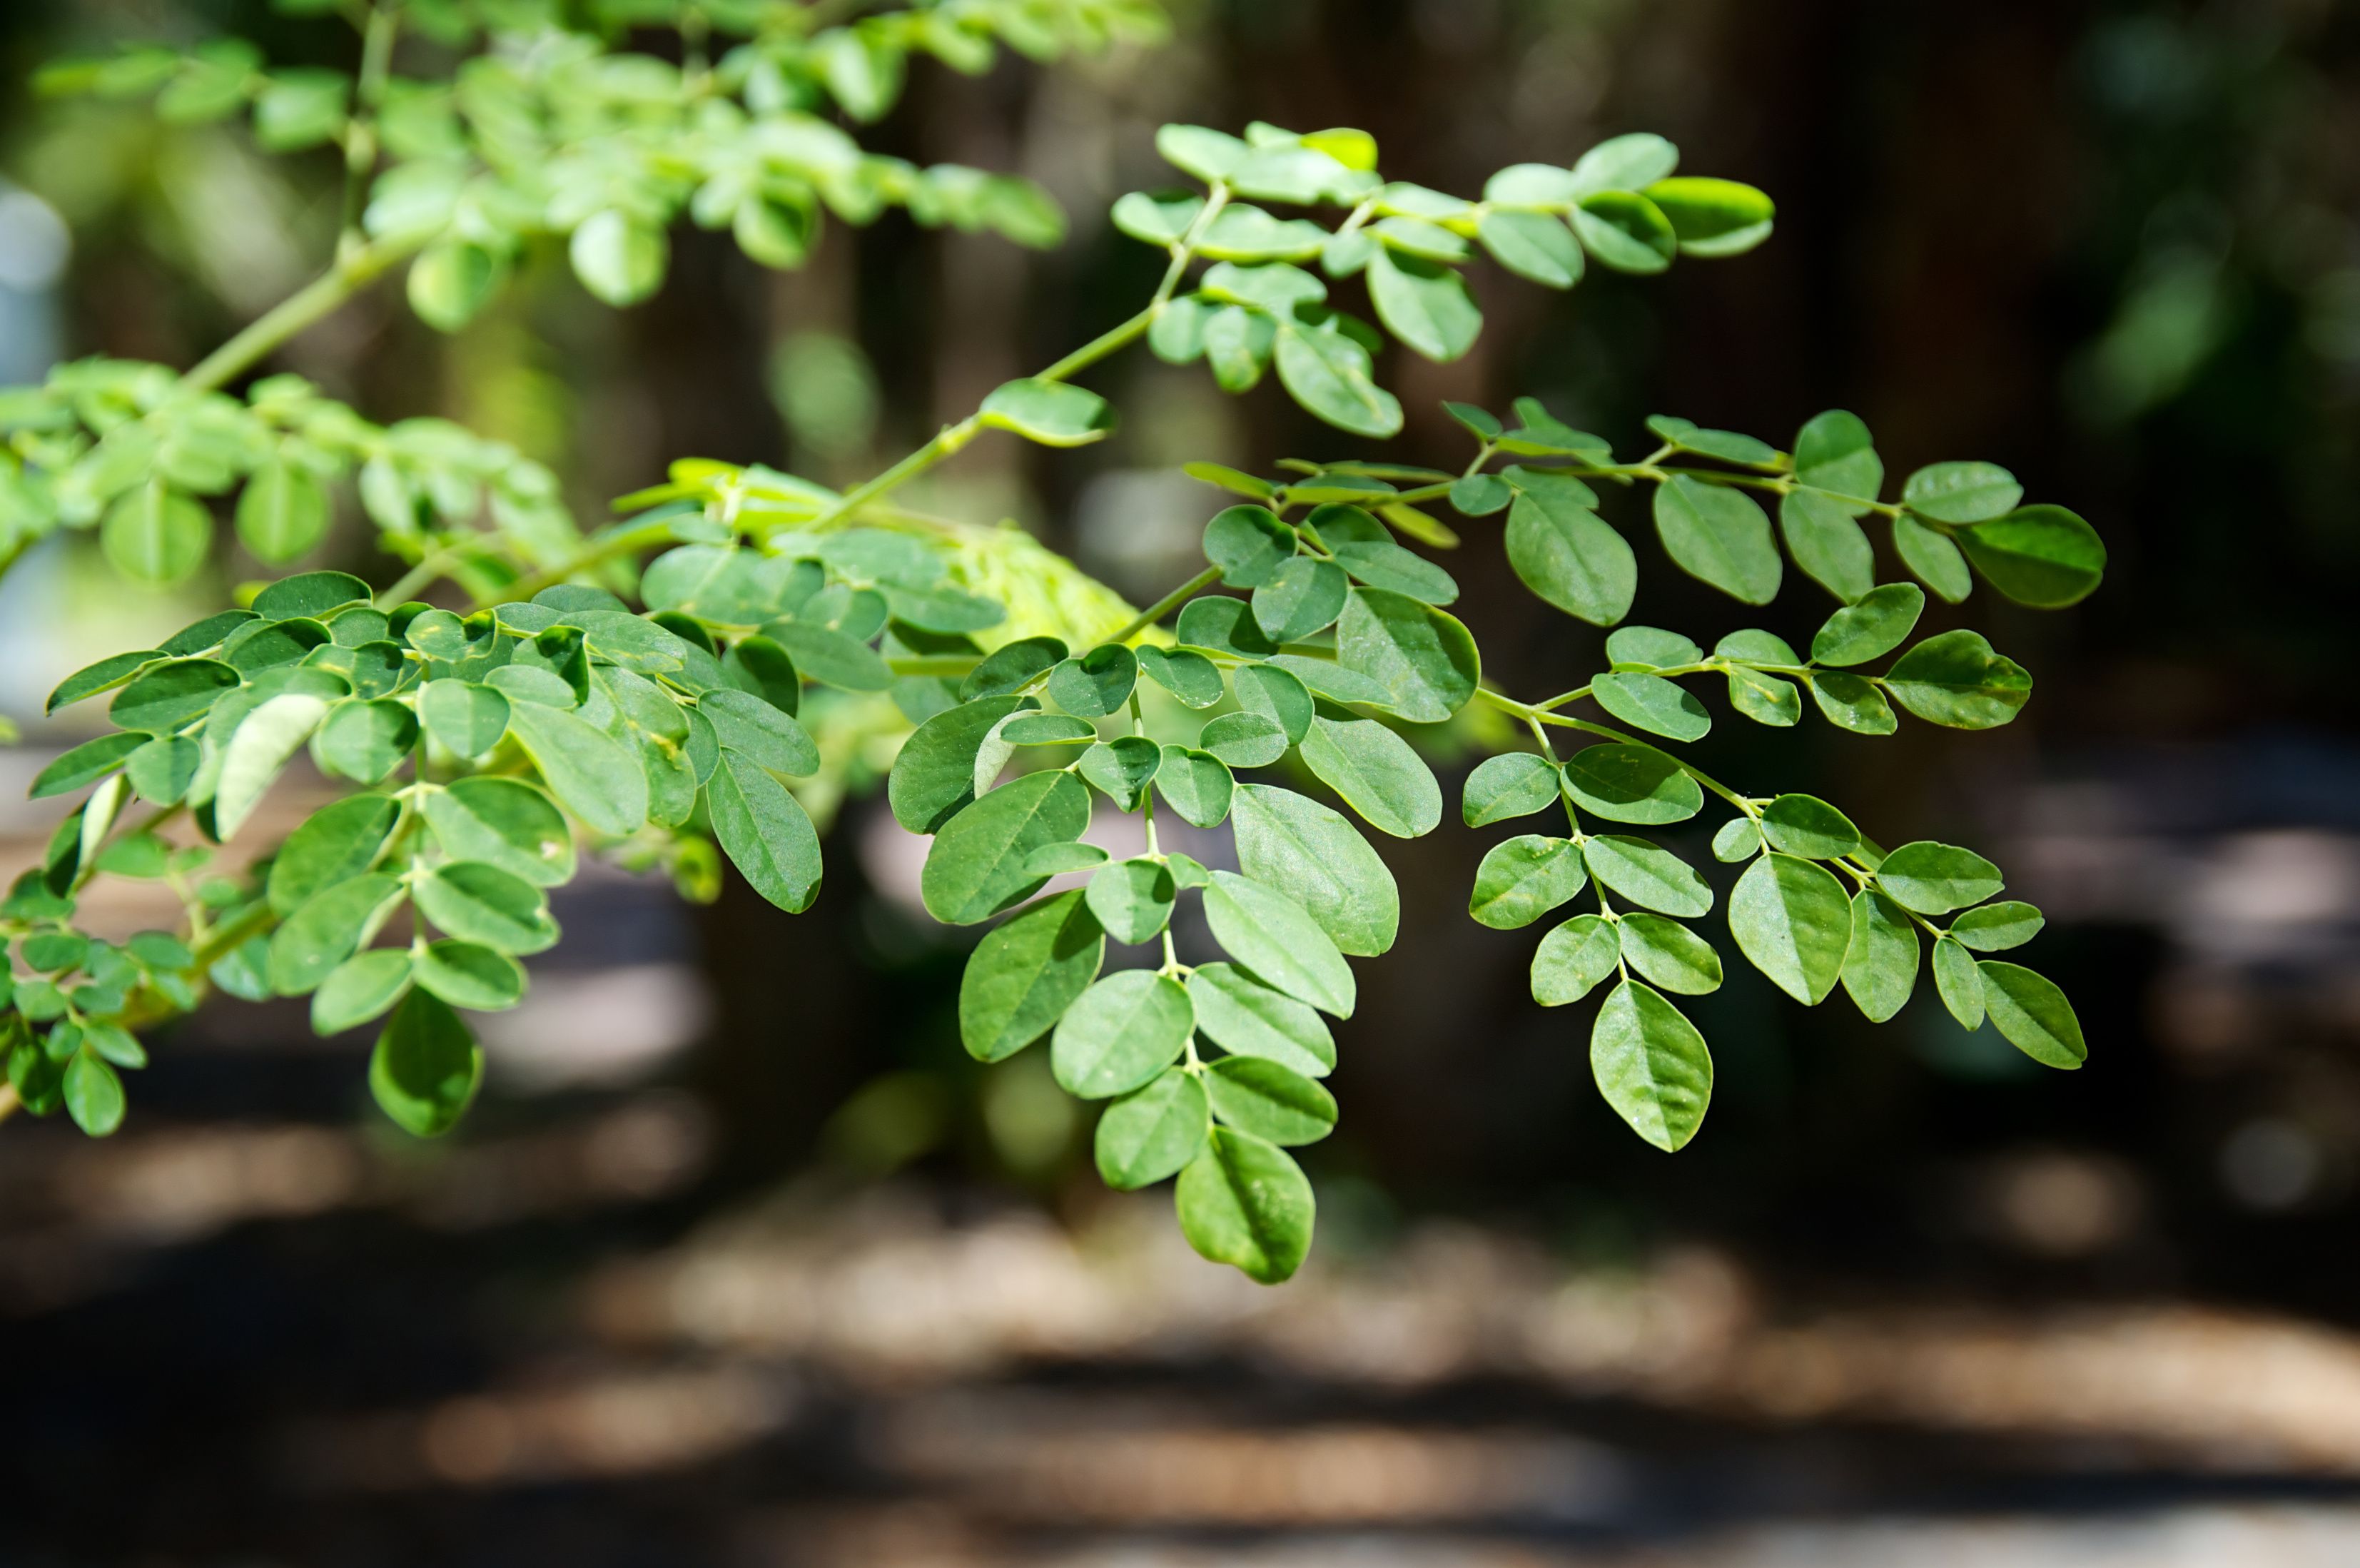  Manfaat daun kelor (Moringa oleifera)